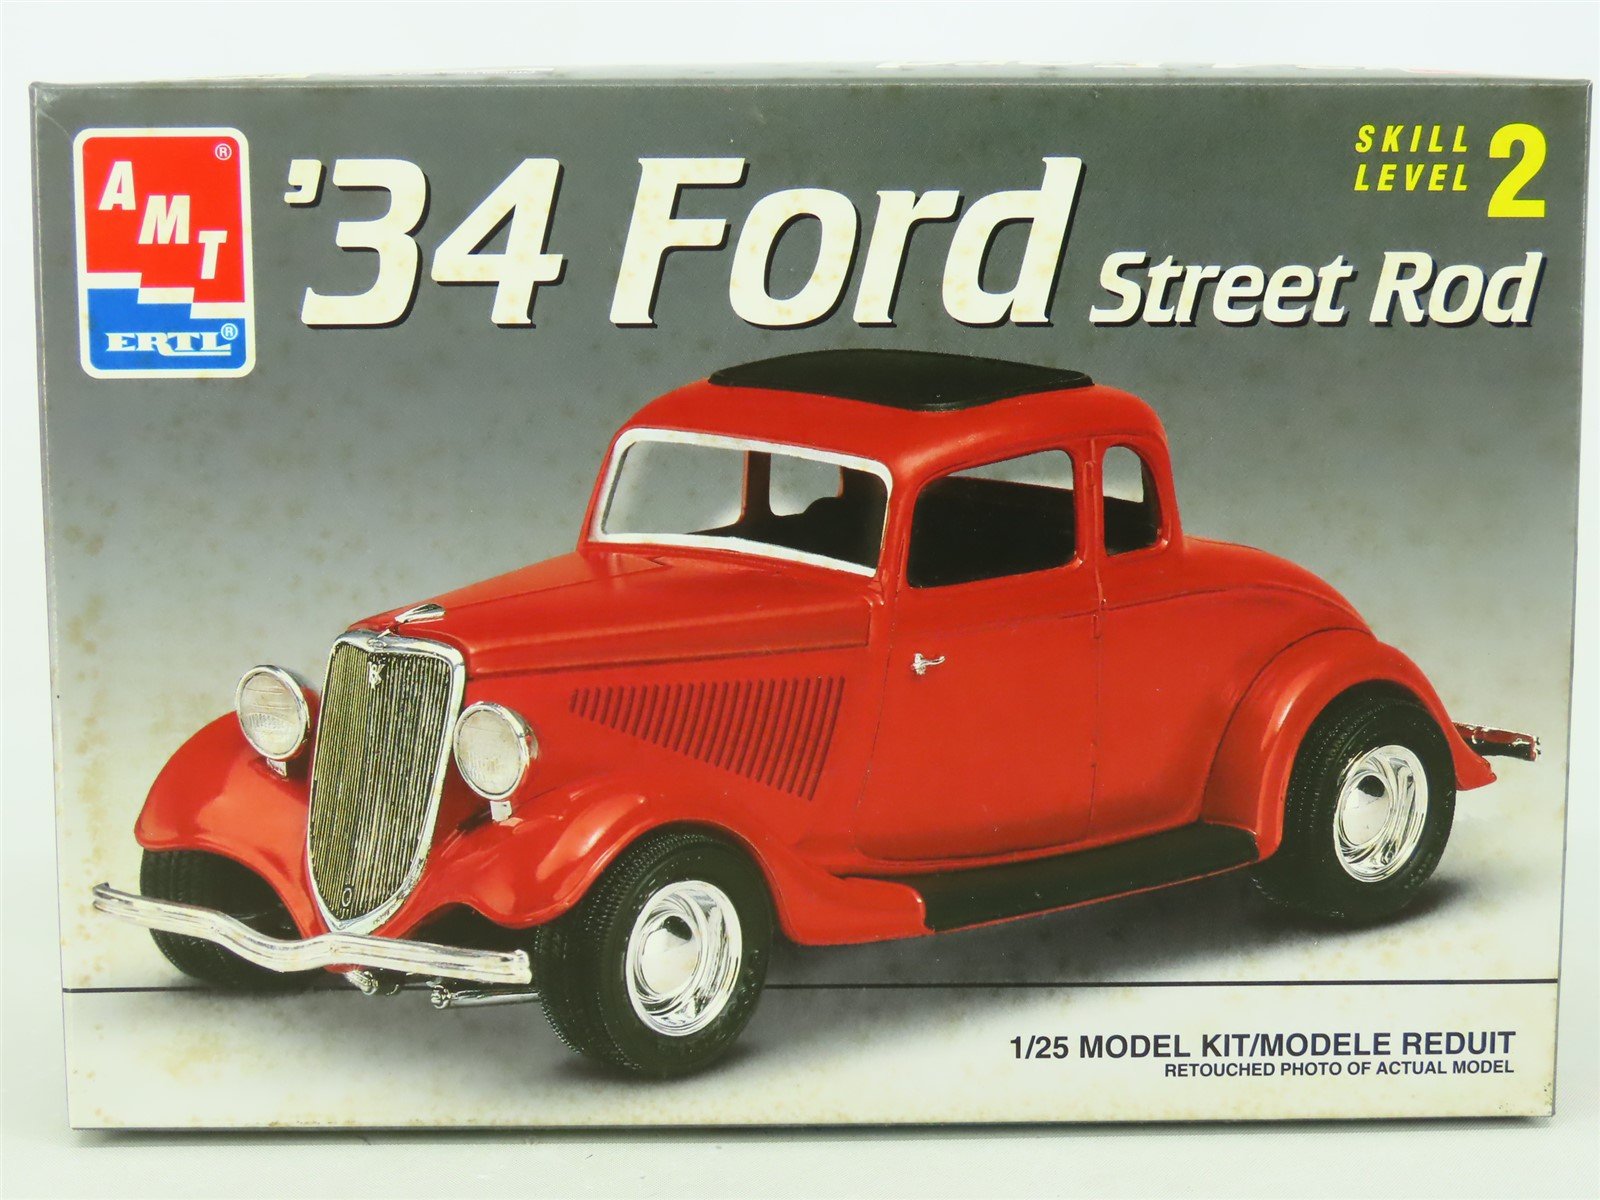 1:25 Scale AMT Ertl Plastic Model Car Kit #6686 '34 Ford Street Rod